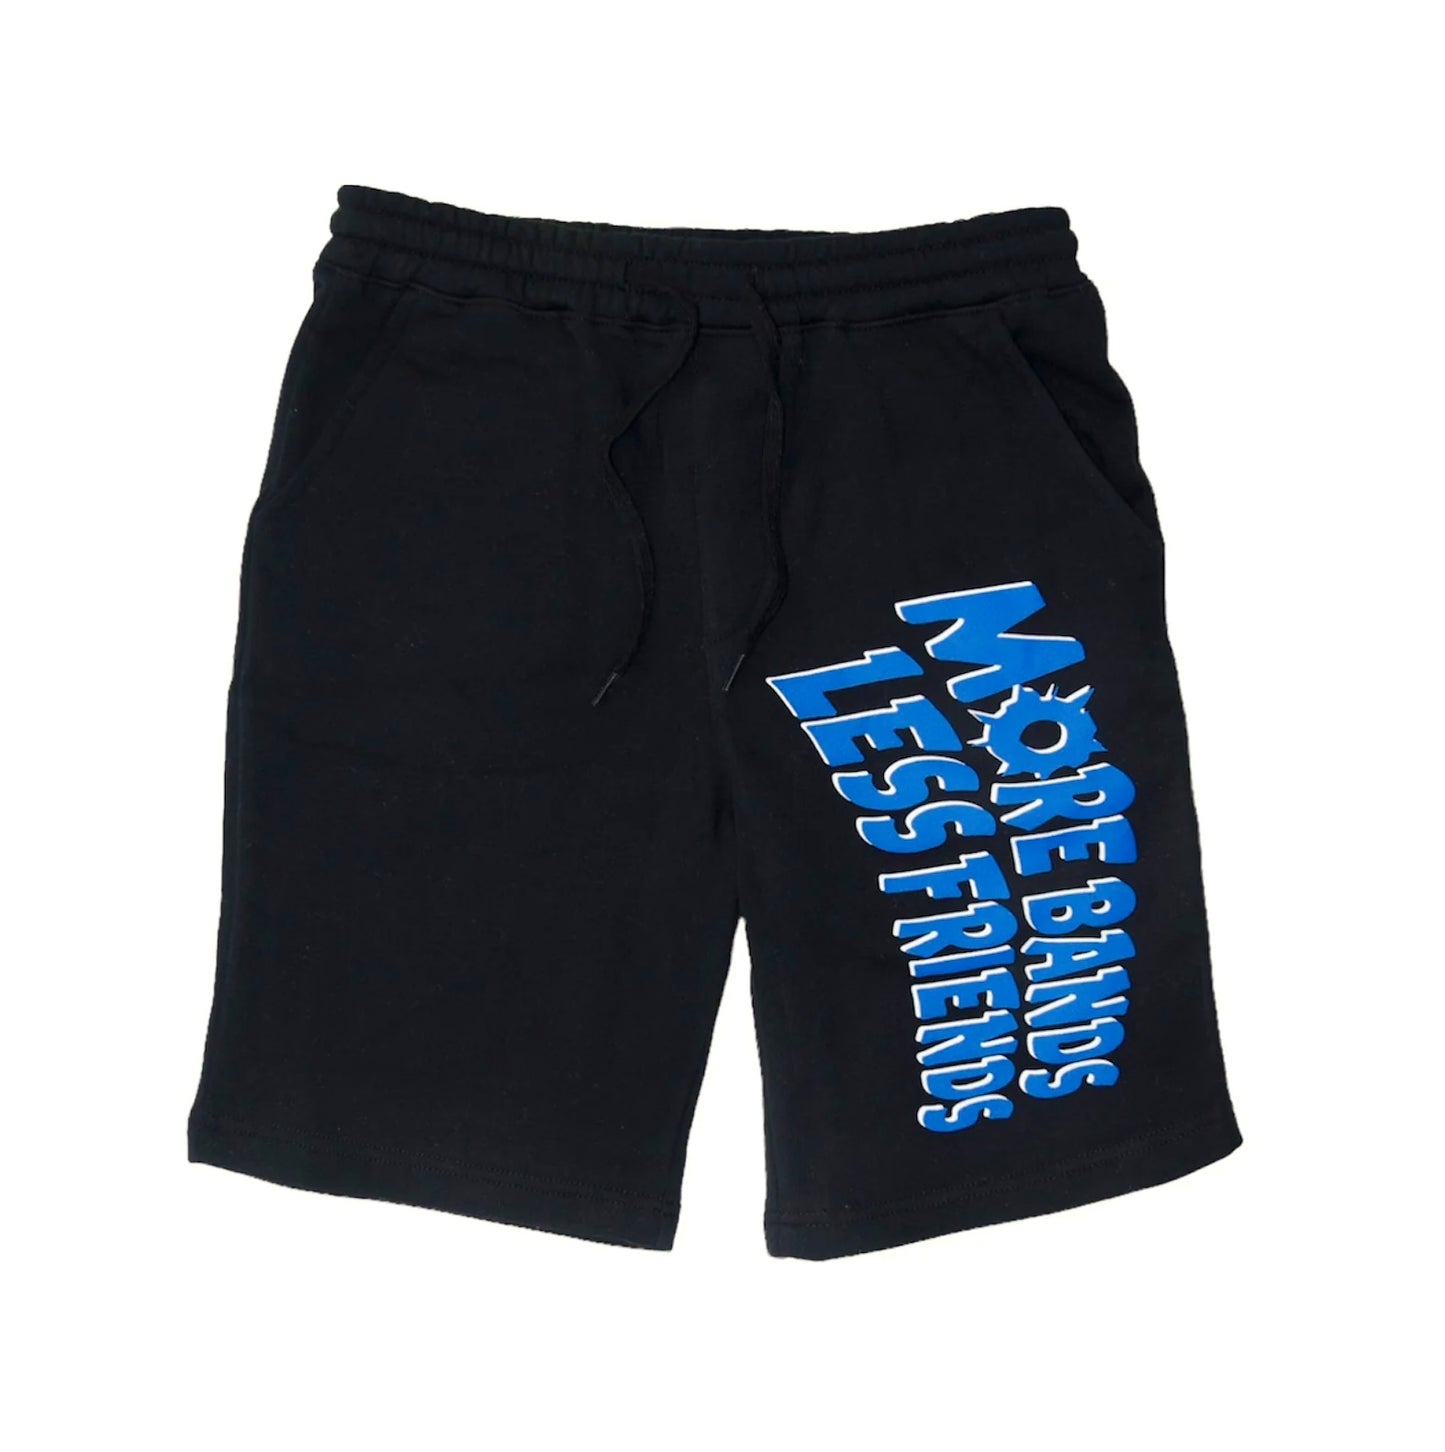 Black “Blue More Bands Less Friends” Fleece Shorts